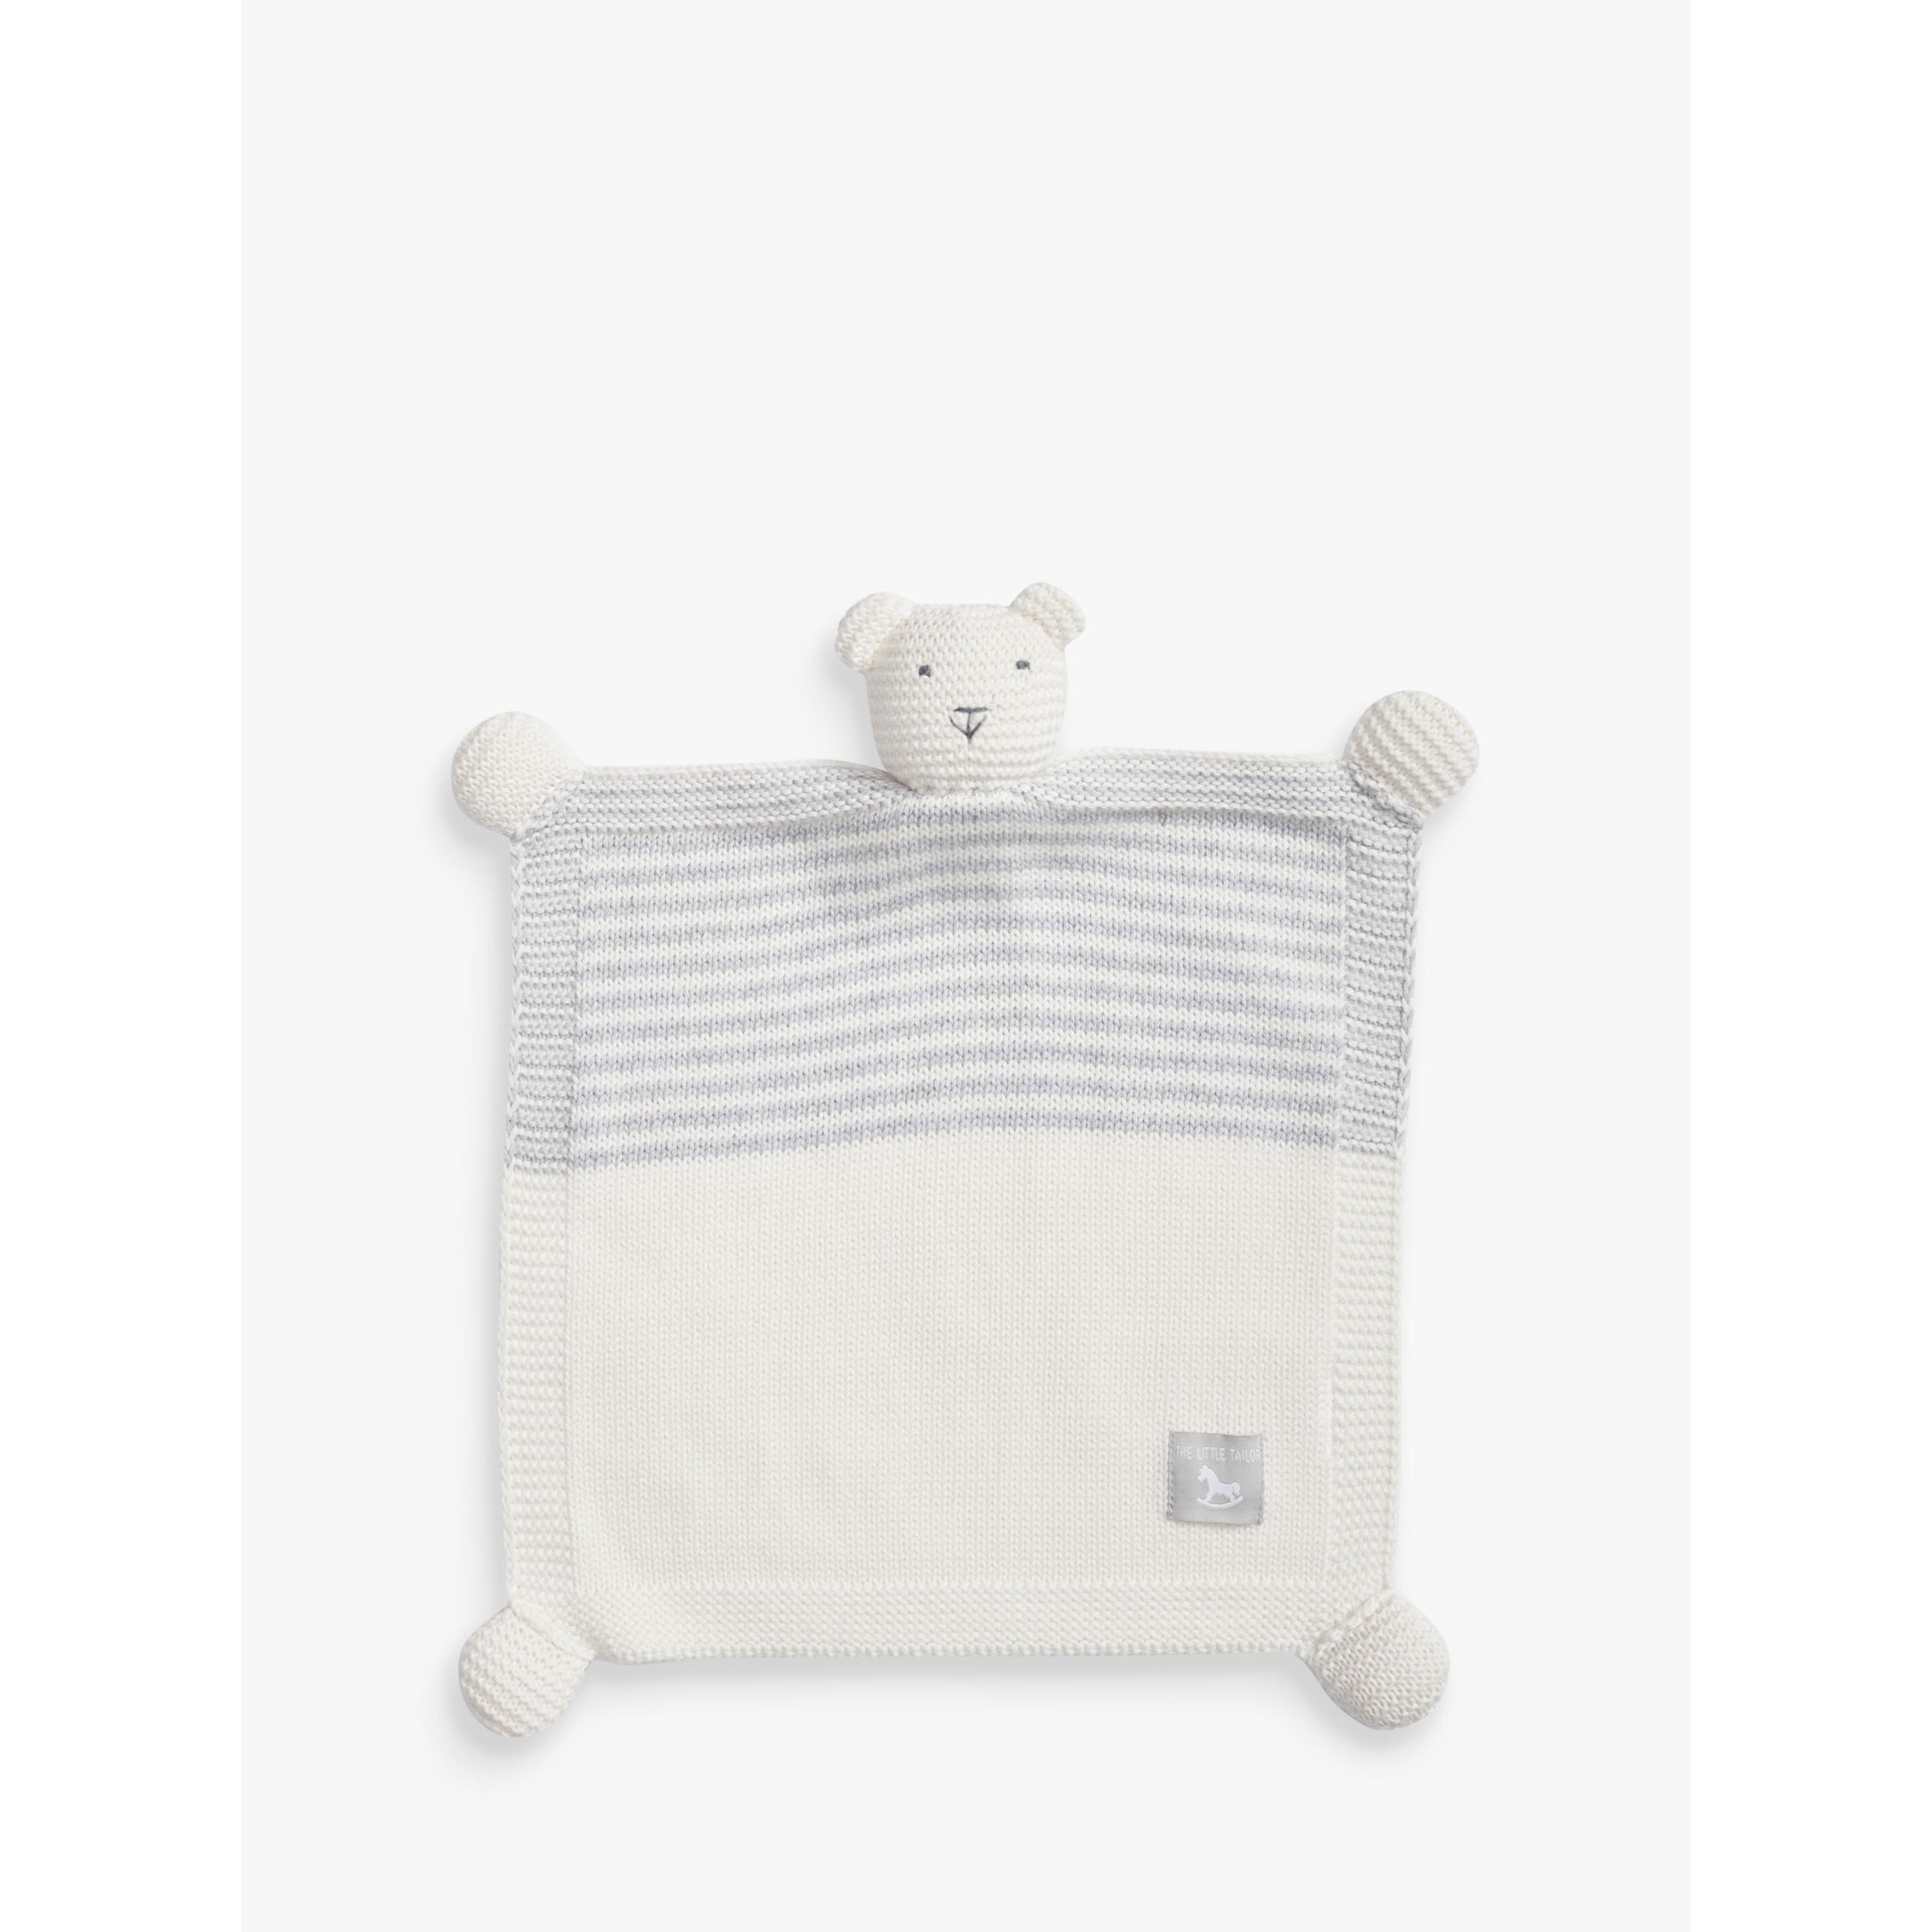 The Little Tailor Baby Knitted Bear Blanket Comforter - image 1